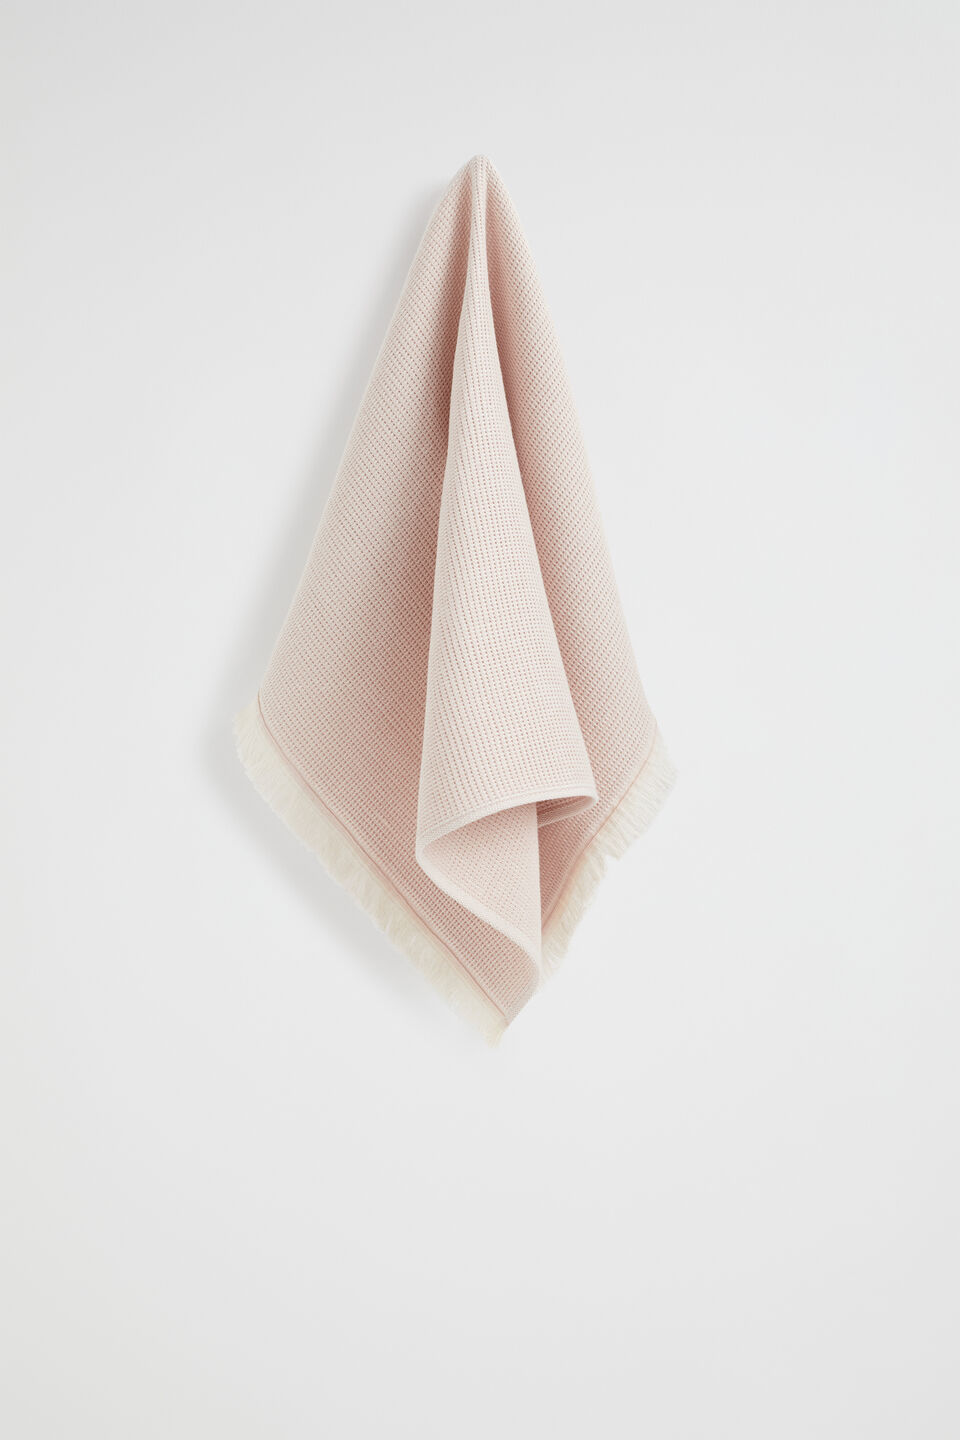 Textured Tea Towel  Blush